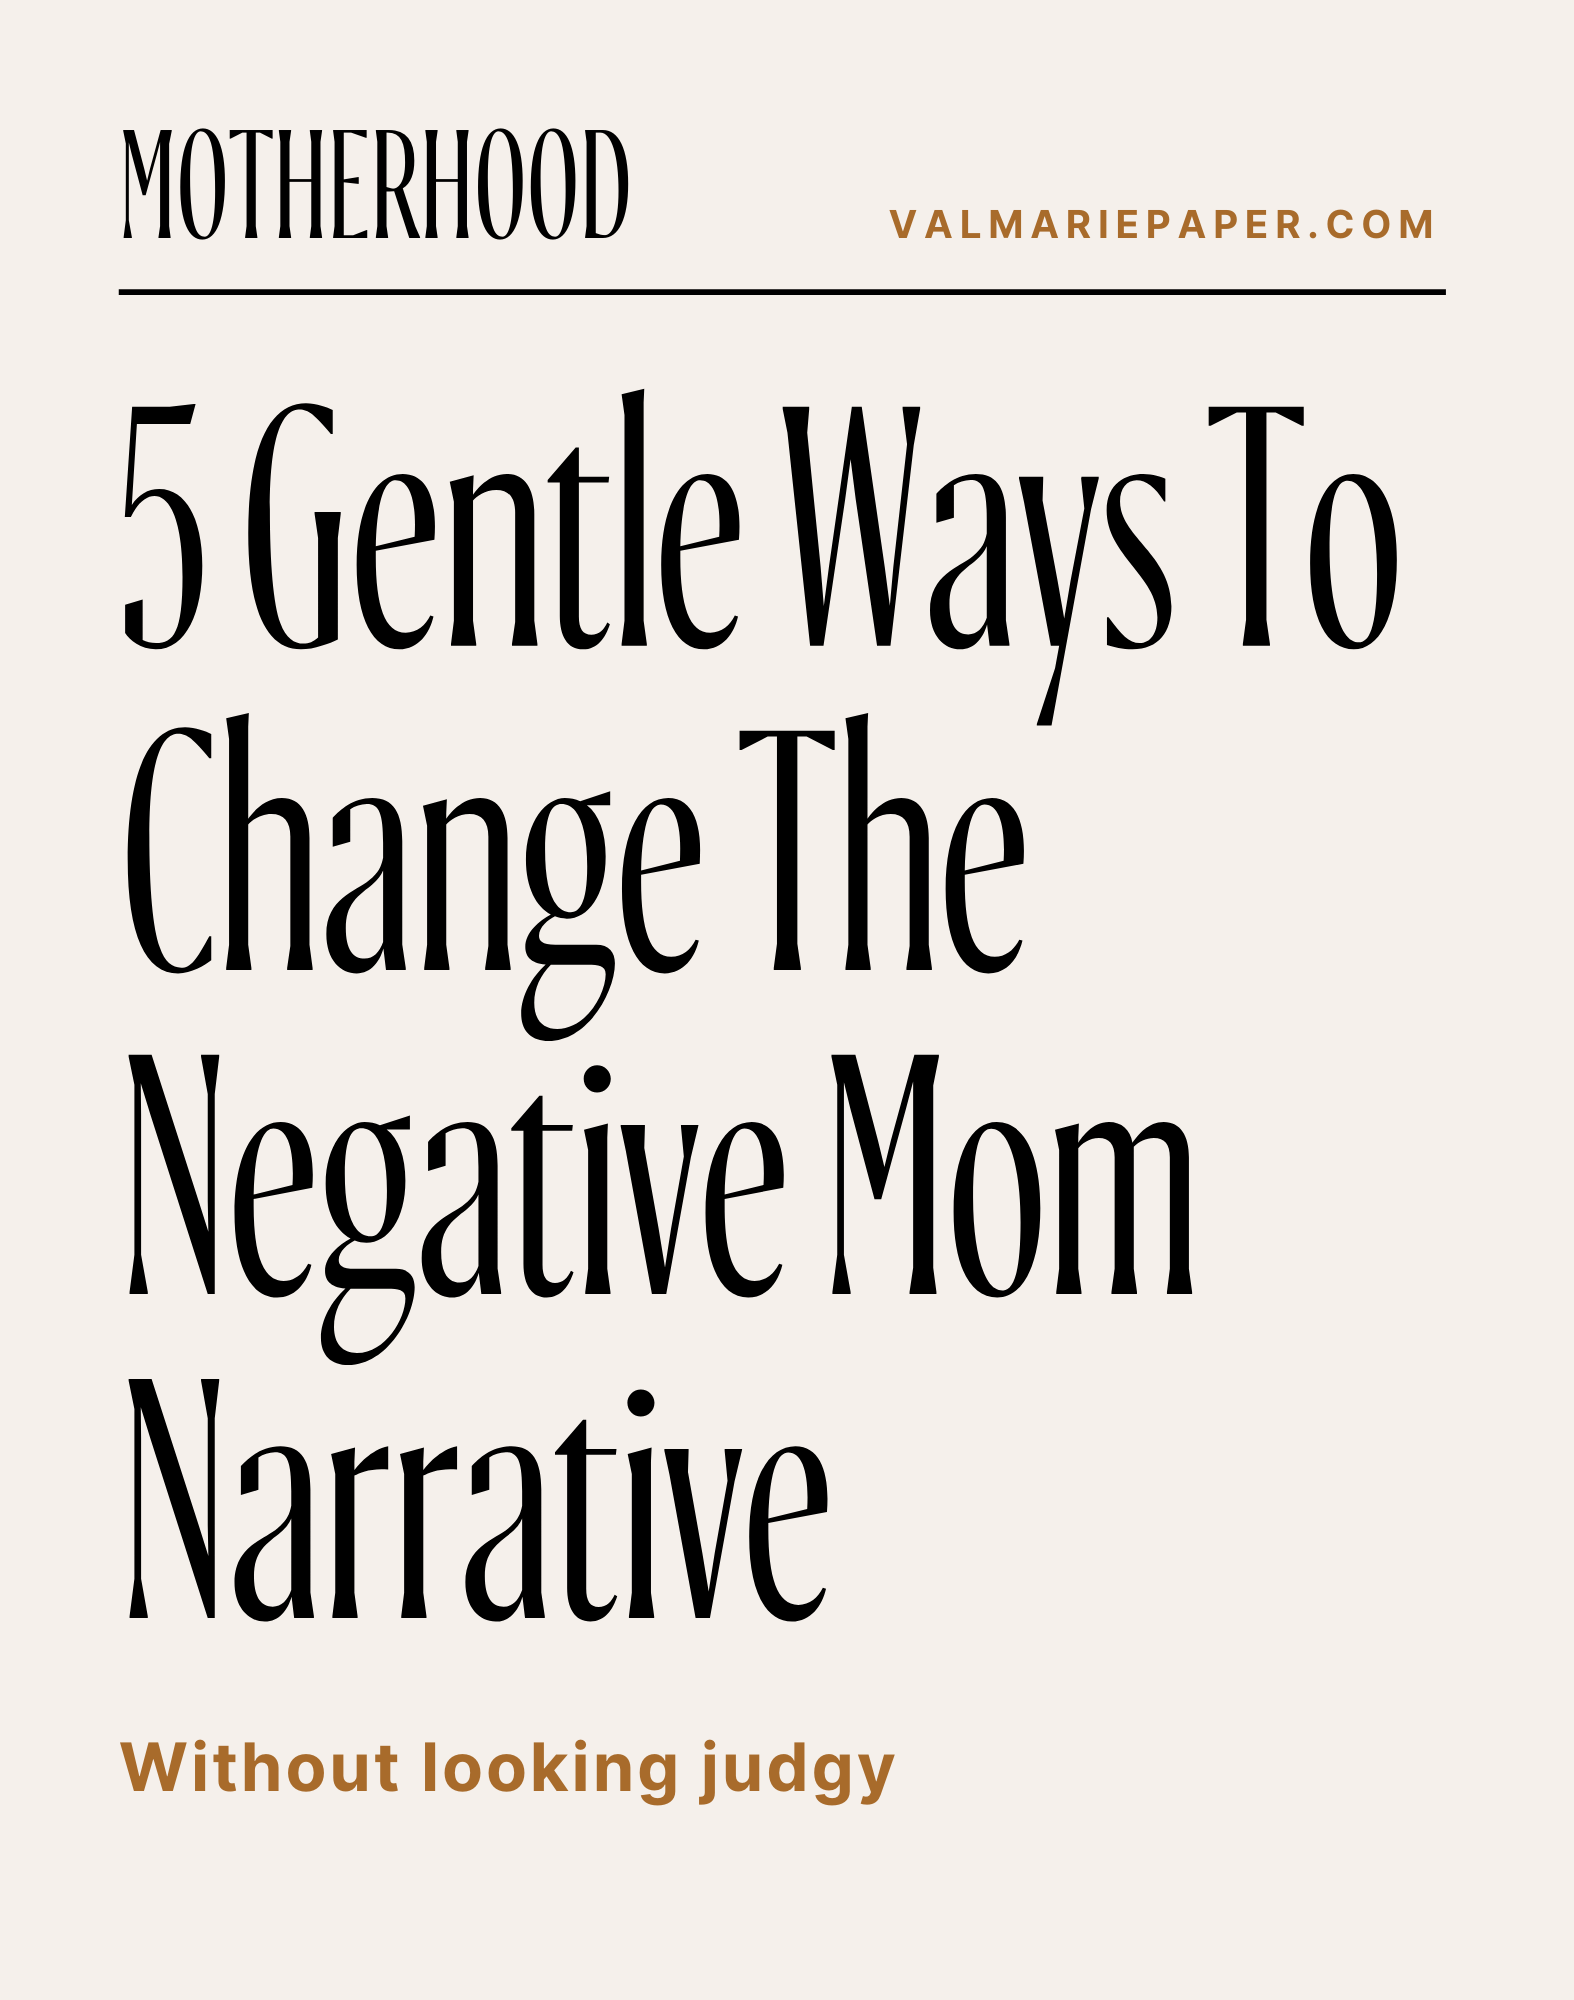 5 gentle ways to change the negative mom narrative by Valerie Woerner, motherhood, christian parenting, negativity in mothering